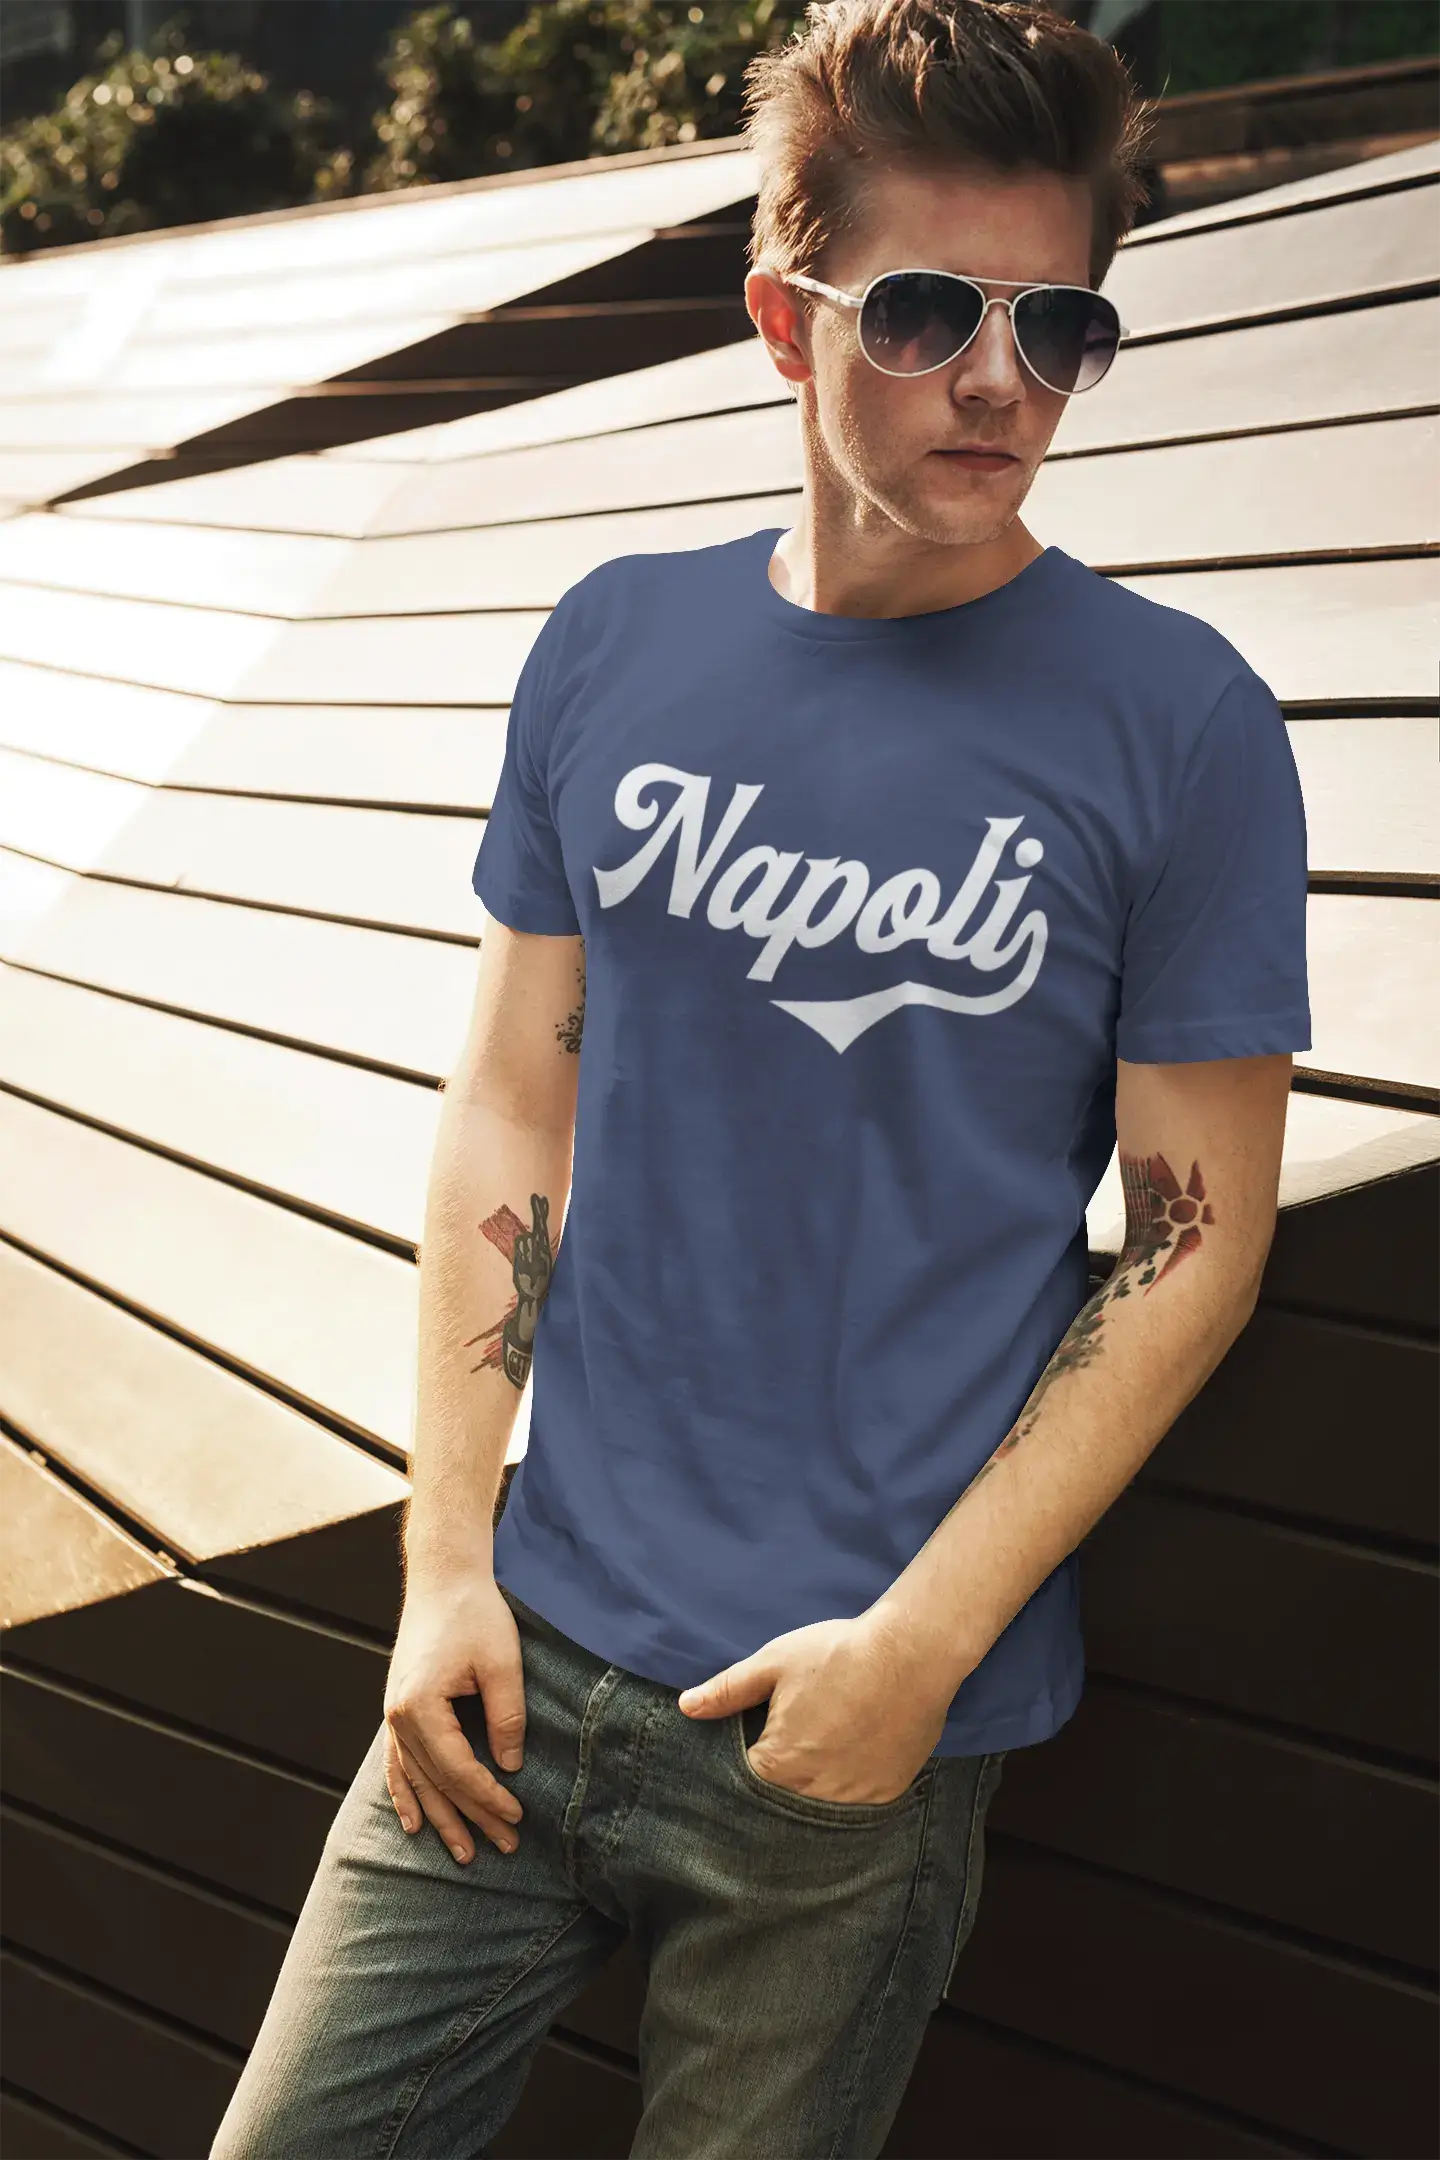 ULTRABASIC – Napoli-T-Shirt aus Denim <span>für Herren</span> <span>mit</span> <span>Grafikdruck</span>